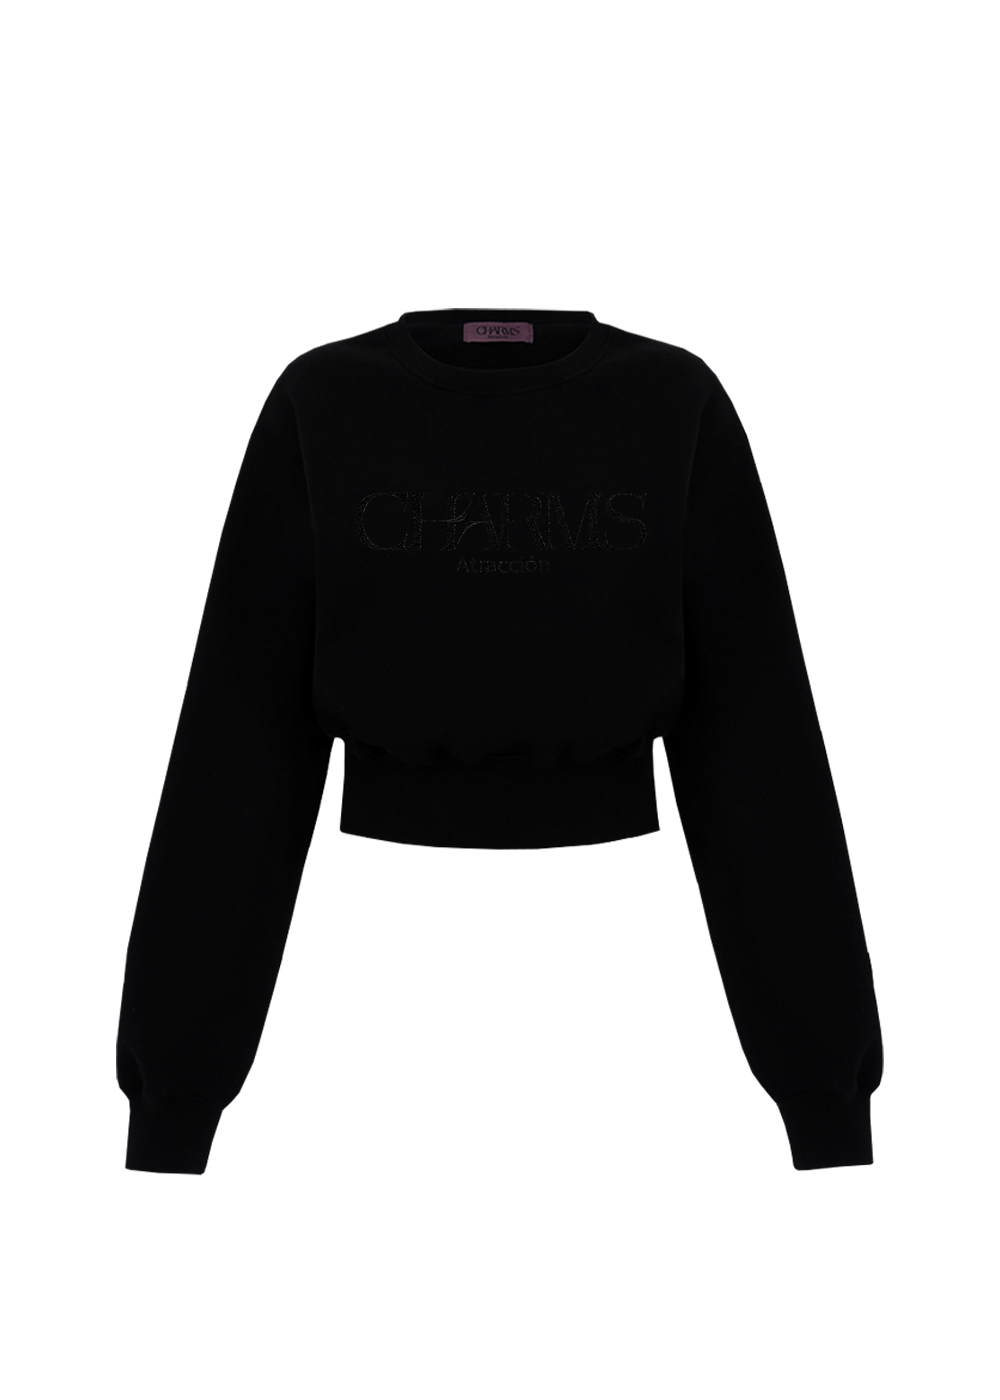 CHARMS Signature Crop Sweatshirt